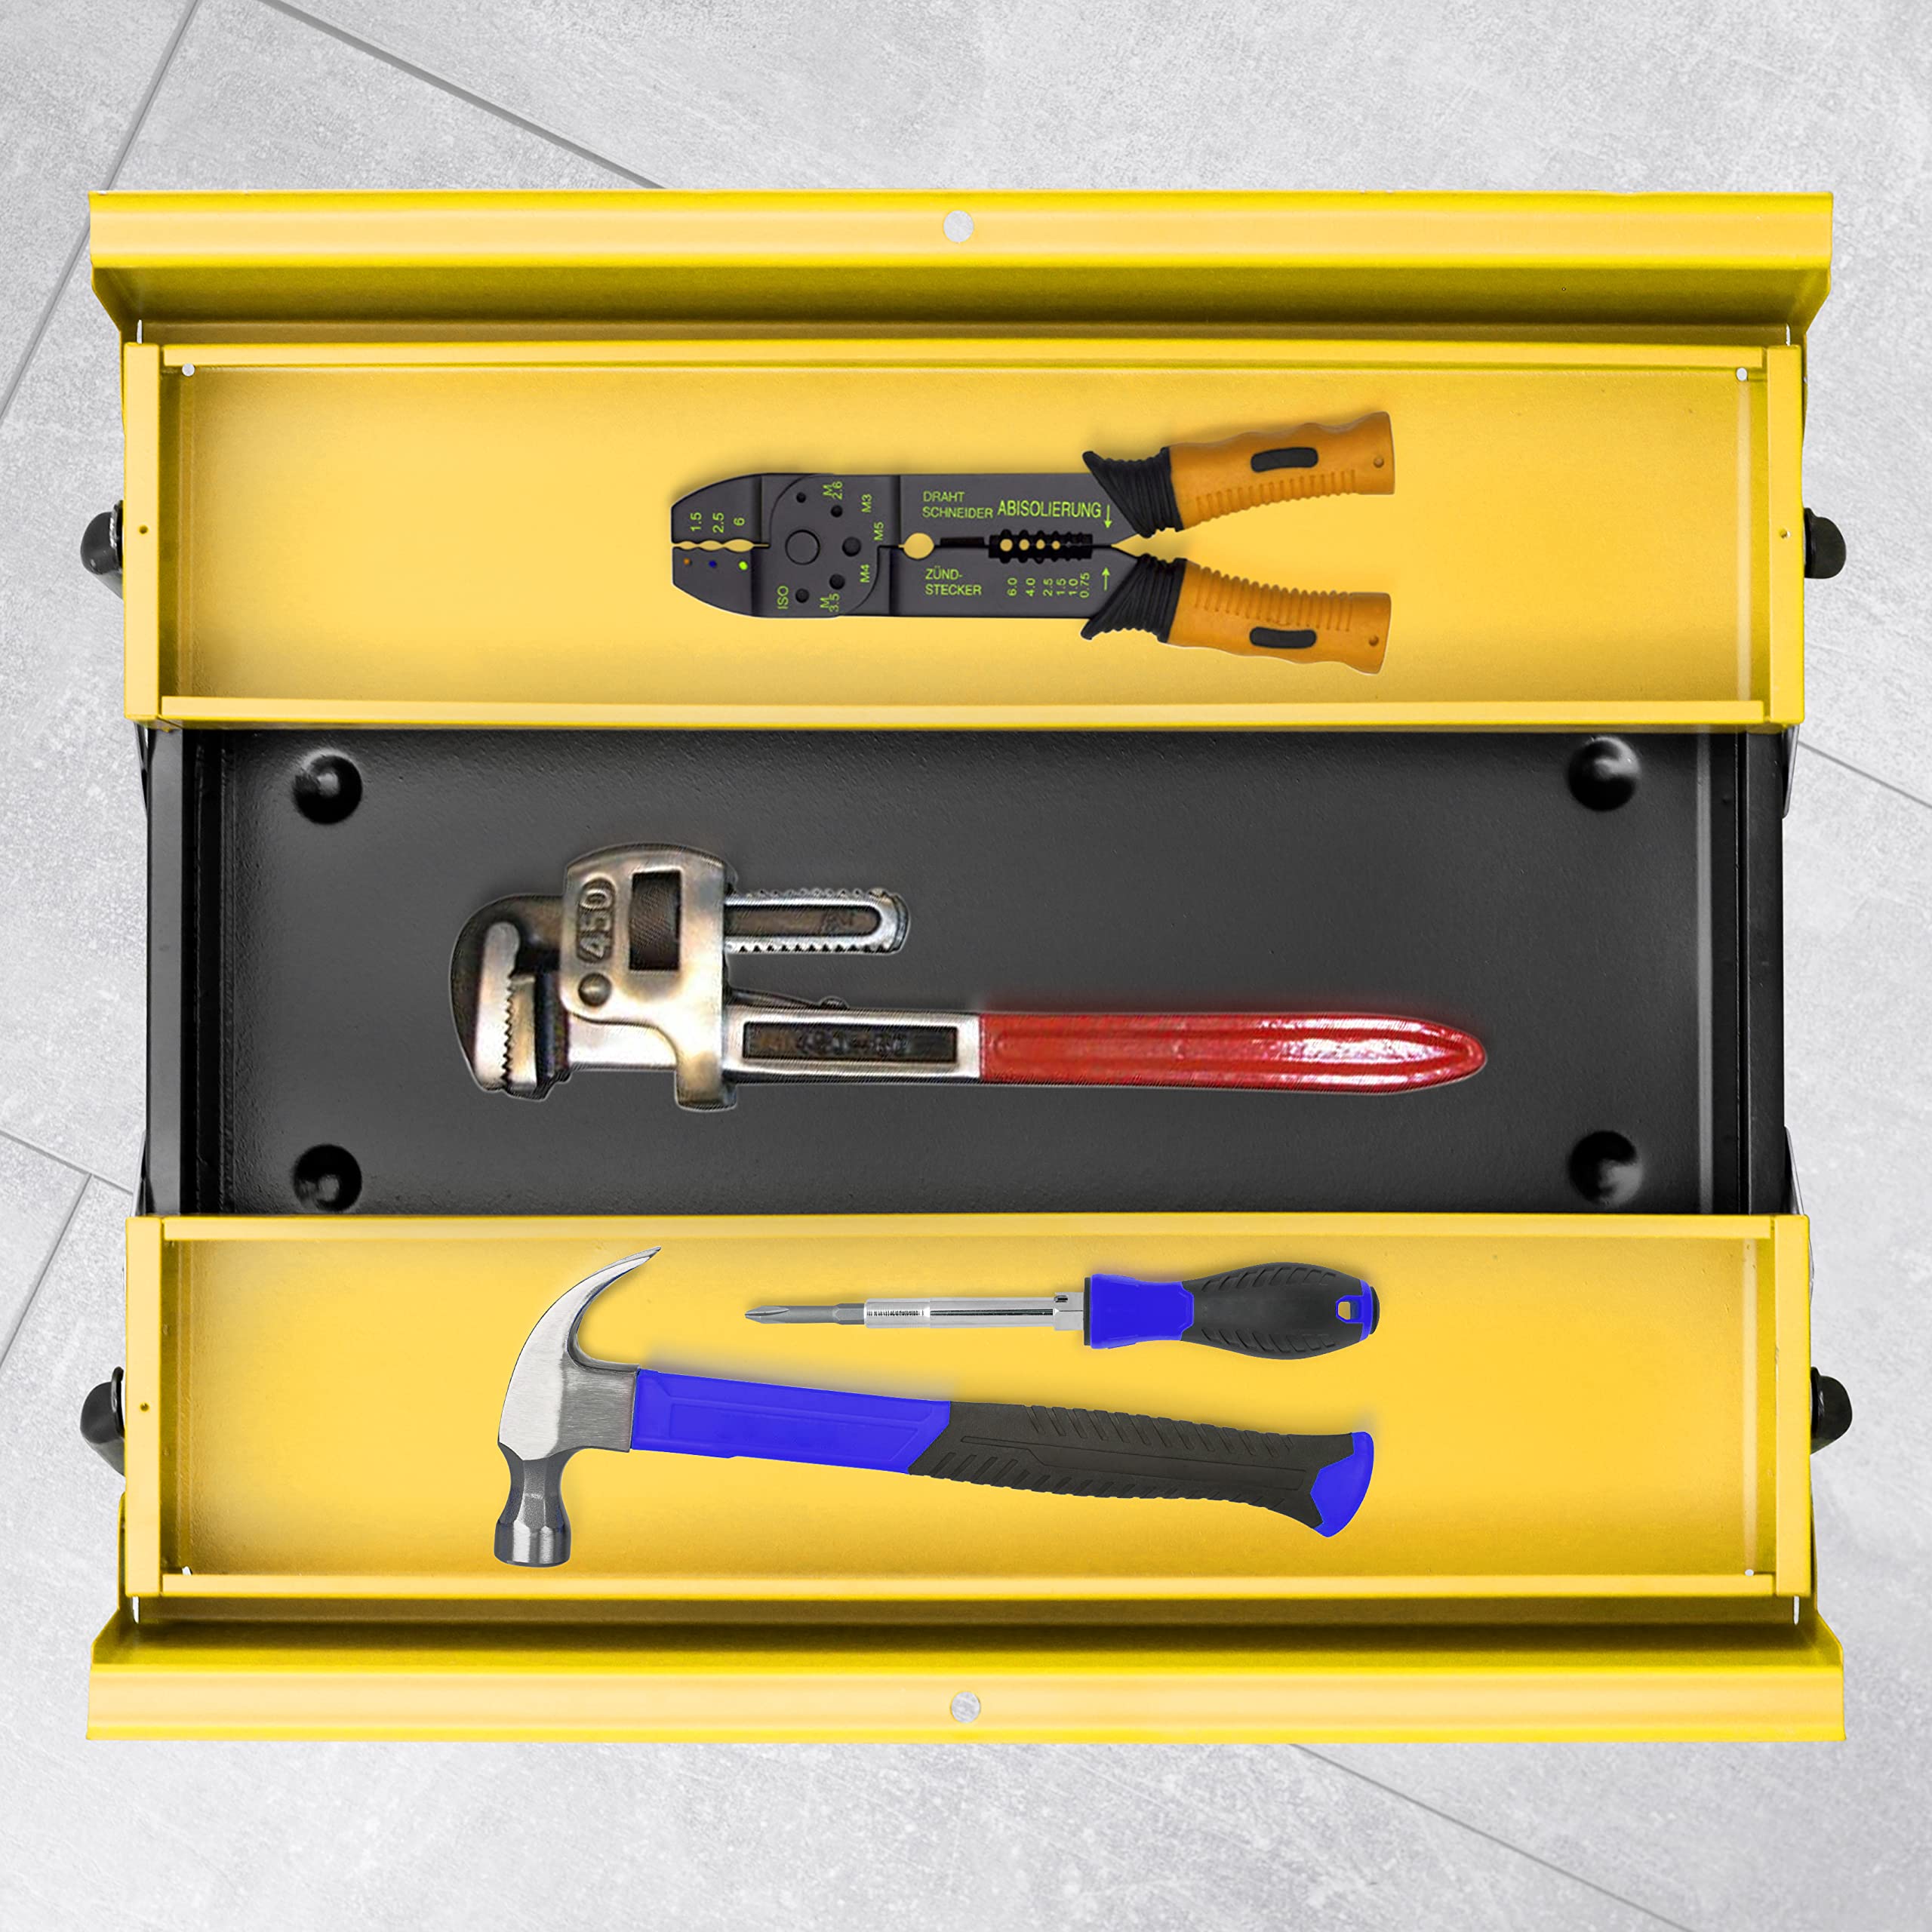 Plantex High Grade Metal Tool Box for Tools/Tool Kit Box for Home and – GB  Plantex